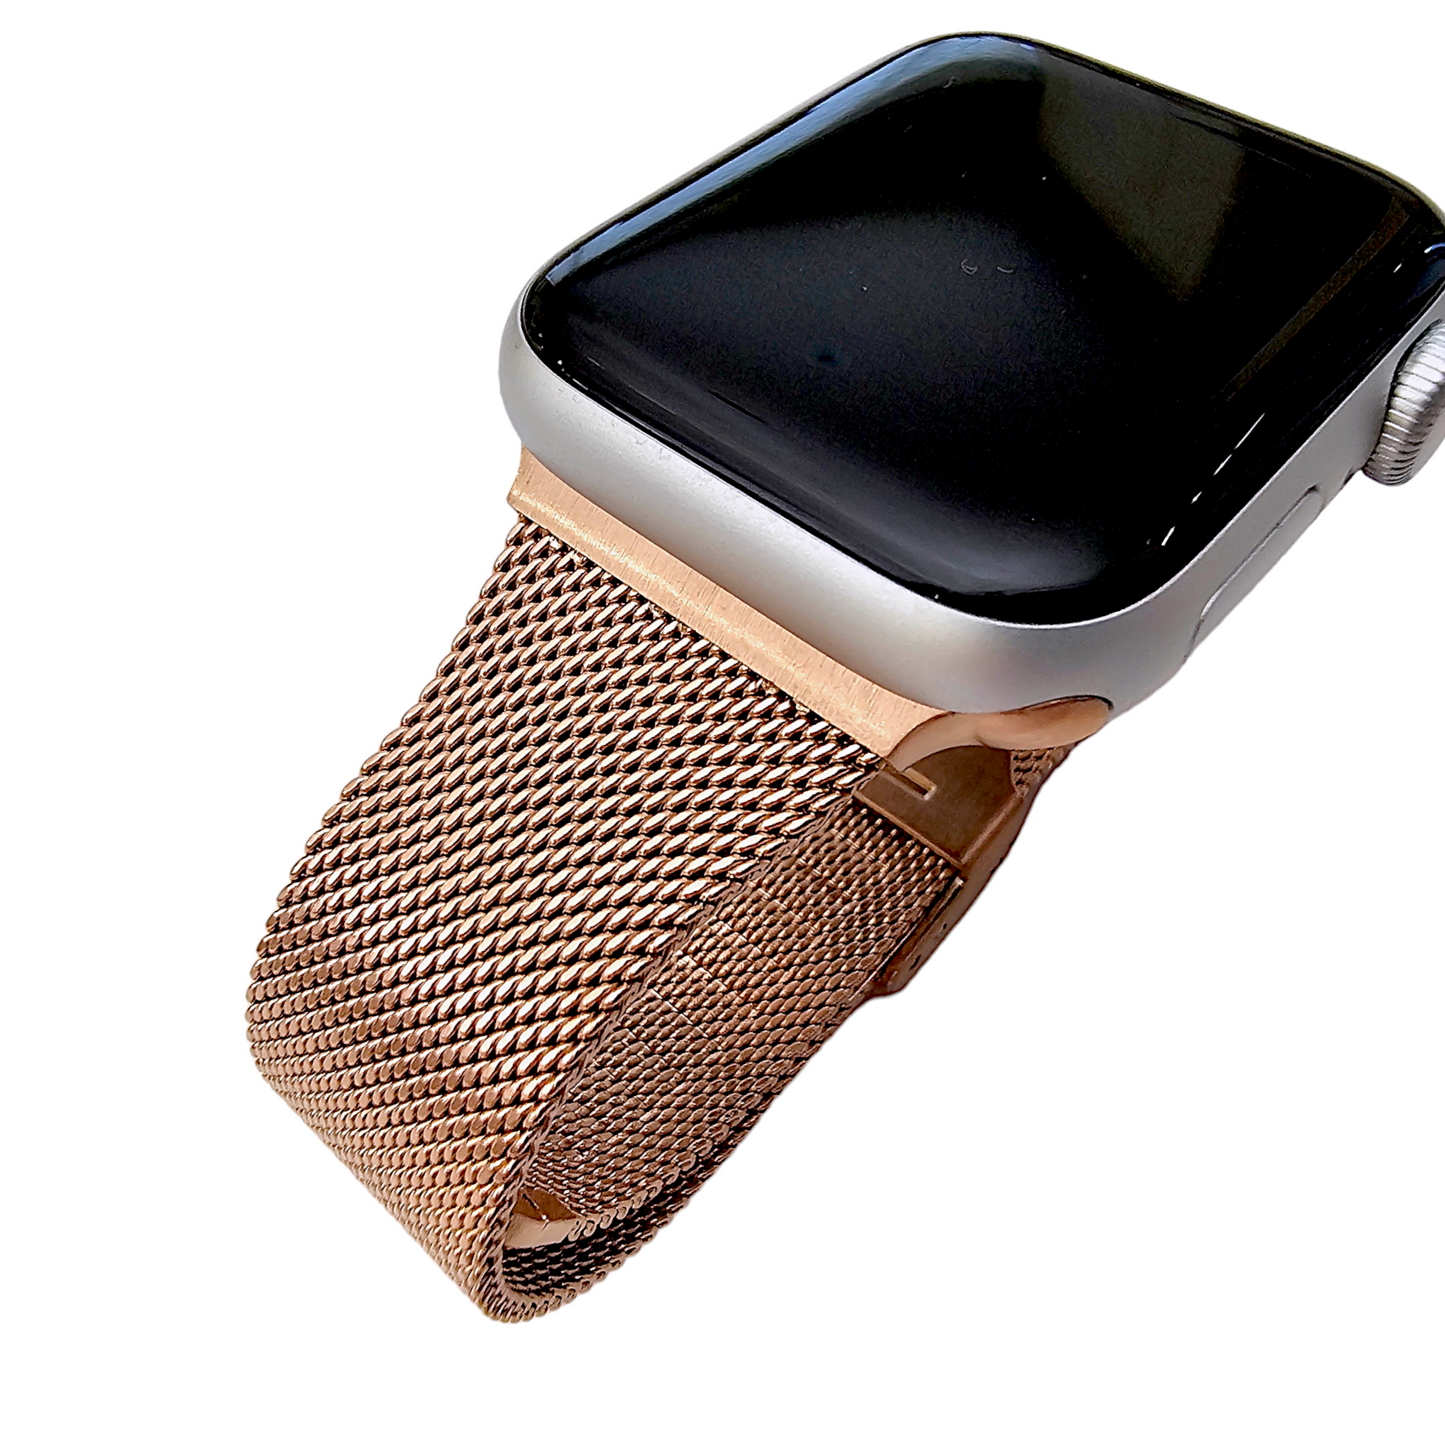 Slim metal milanese Rose Gold PVD stainless steel bracelet for Apple Watch